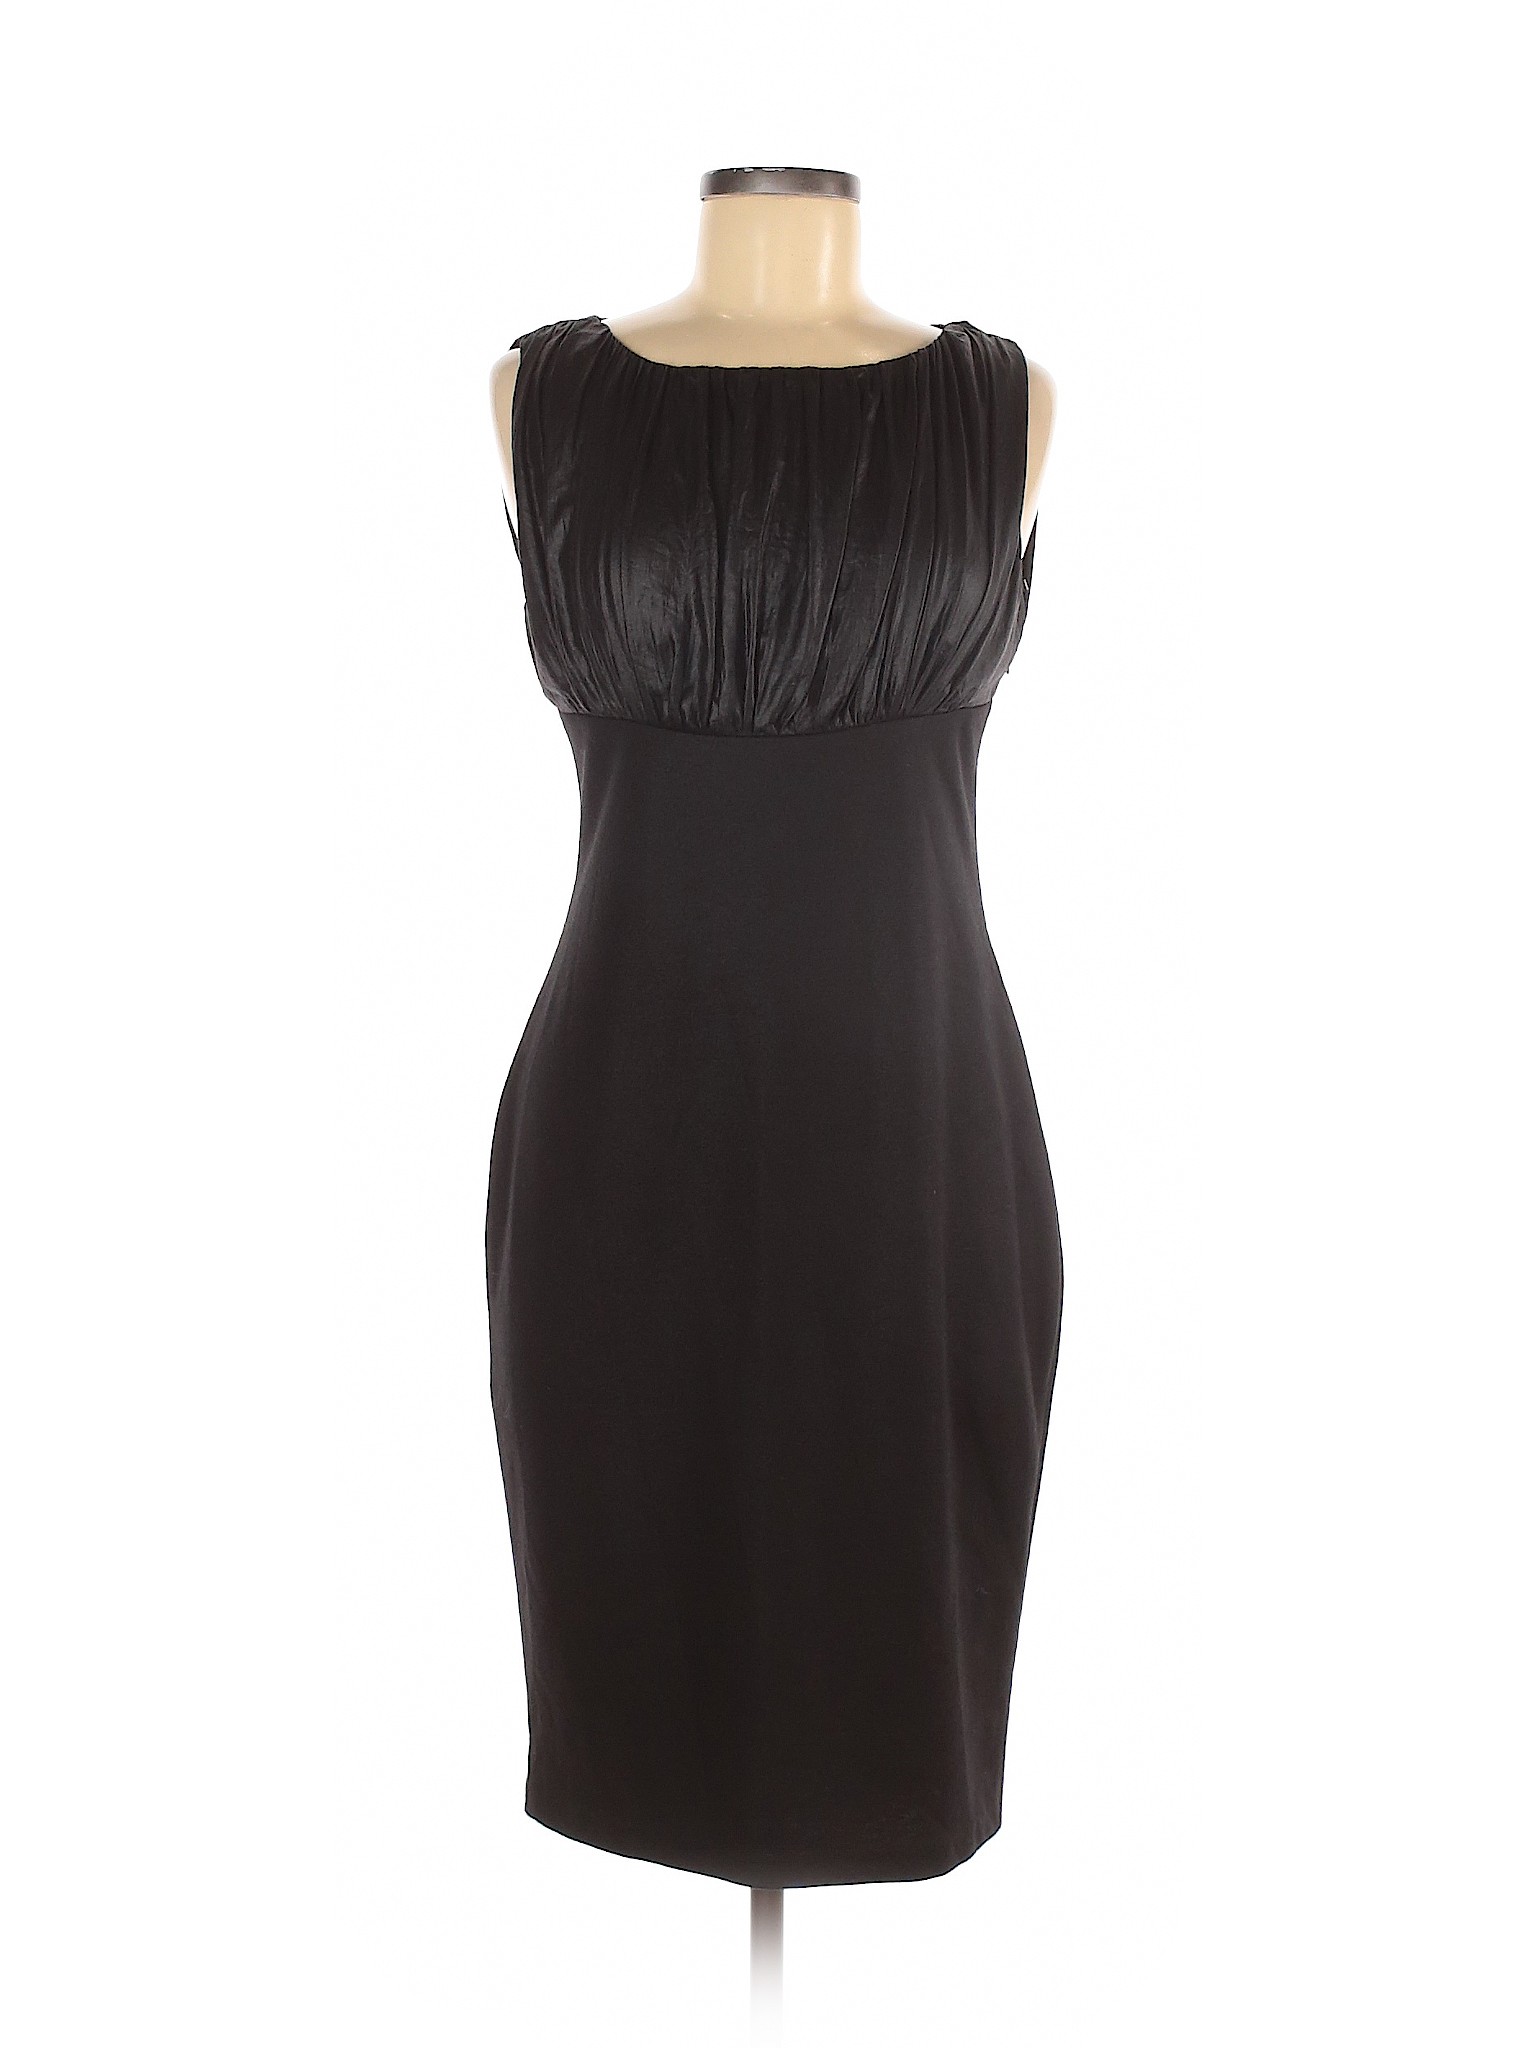 Marc New York Women Black Cocktail Dress 6 | eBay